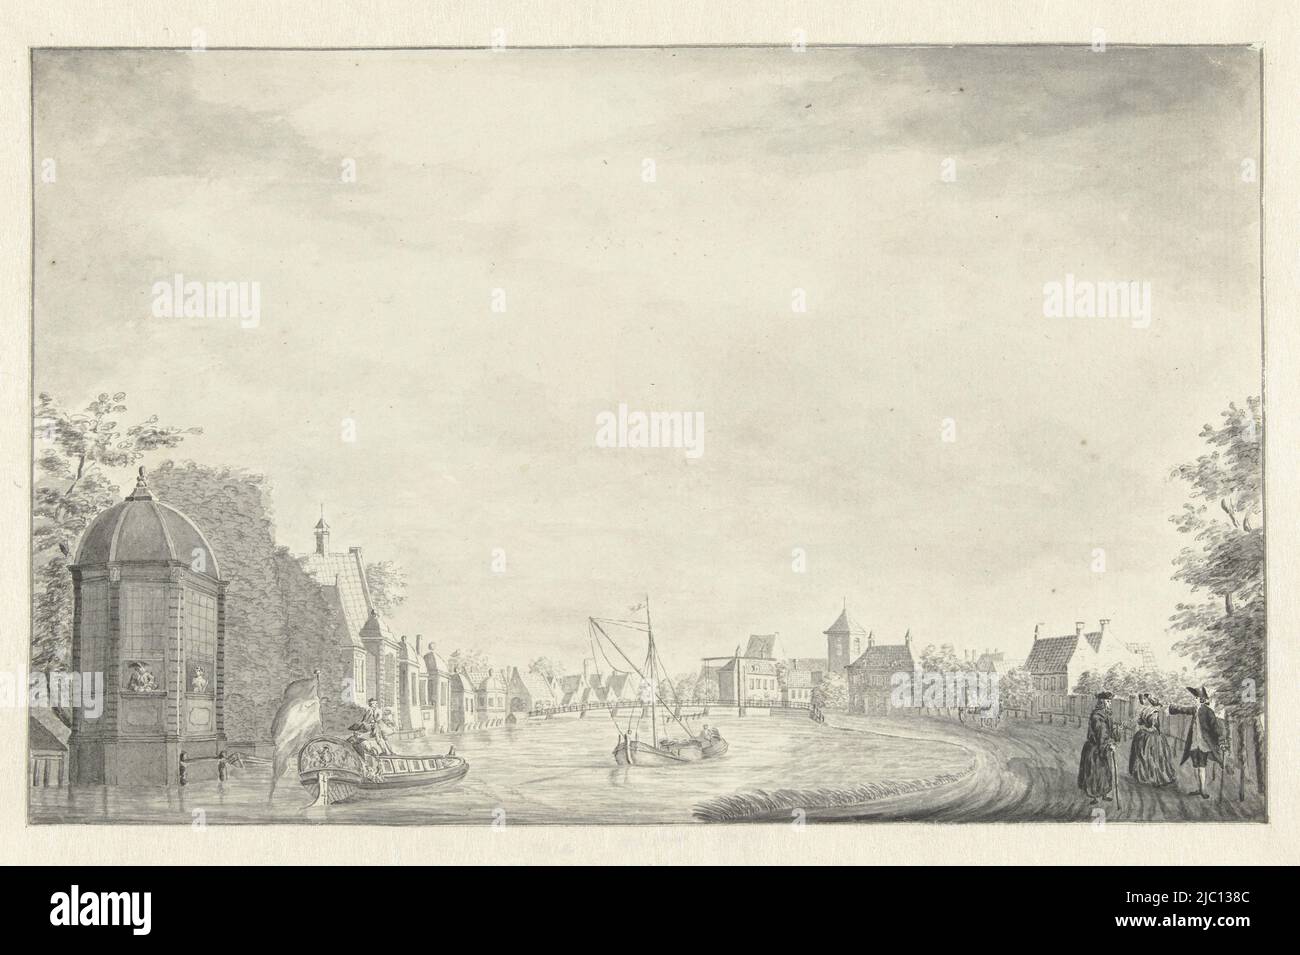 Ouderkerk aan de Amstel, draughtsman: Jan de Beijer, (possibly), 1756, paper, pen, brush, h 155 mm × w 245 mm Stock Photo